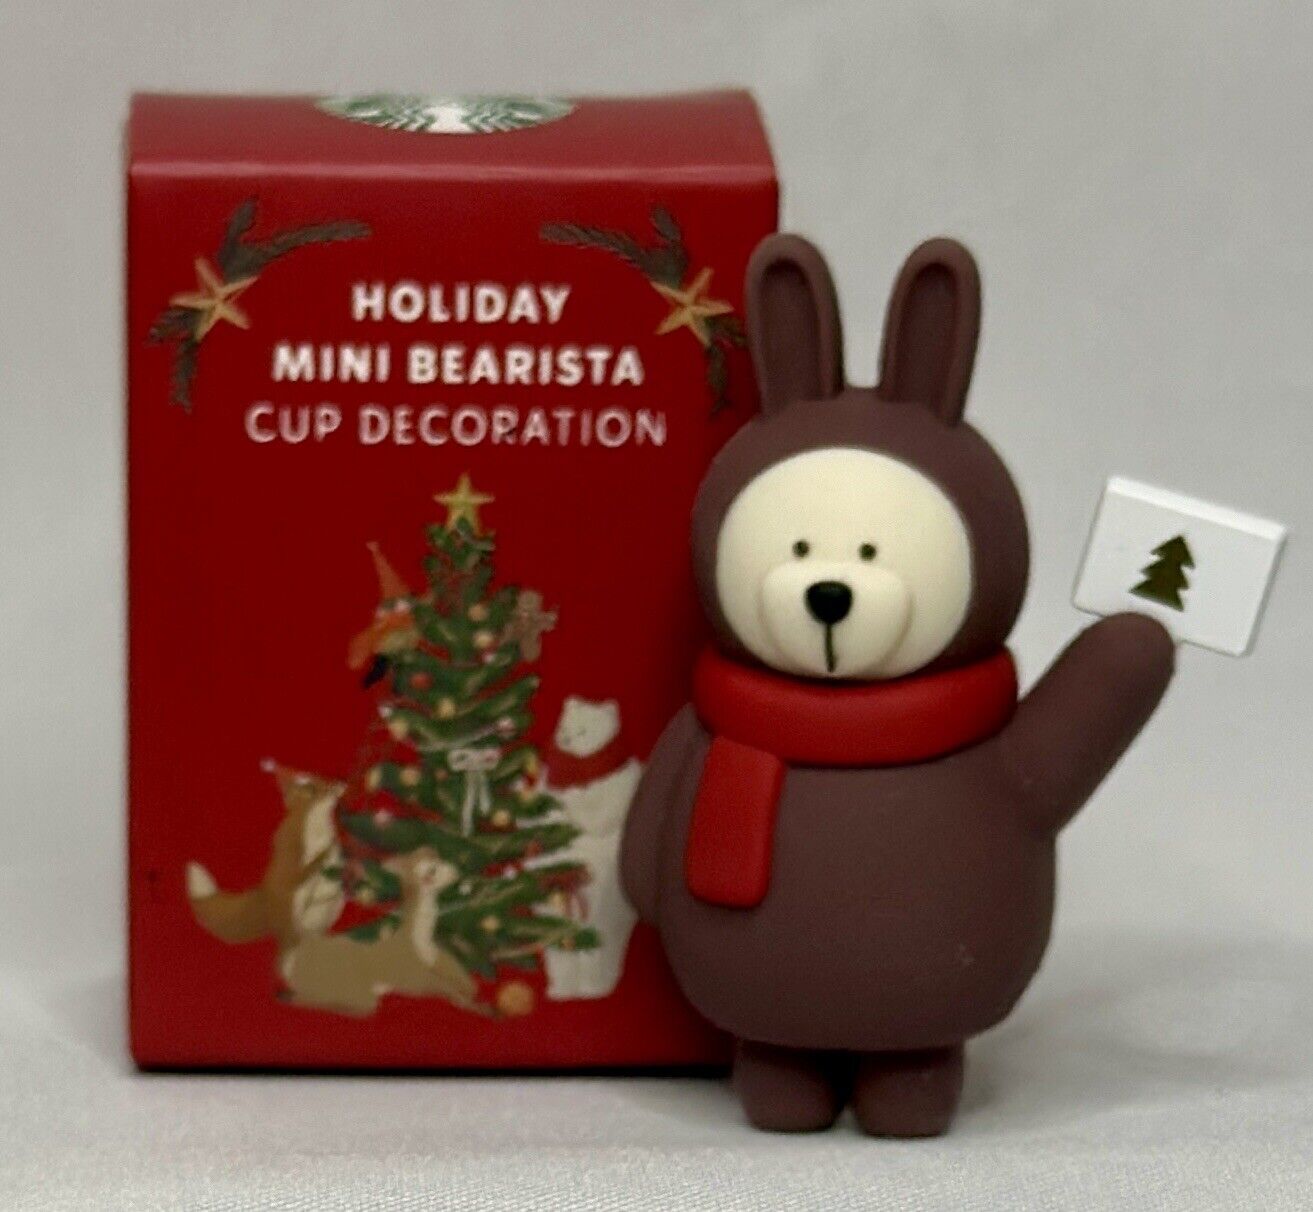 Starbucks Holiday Mini Bearista Cup Decoration - Rabbit